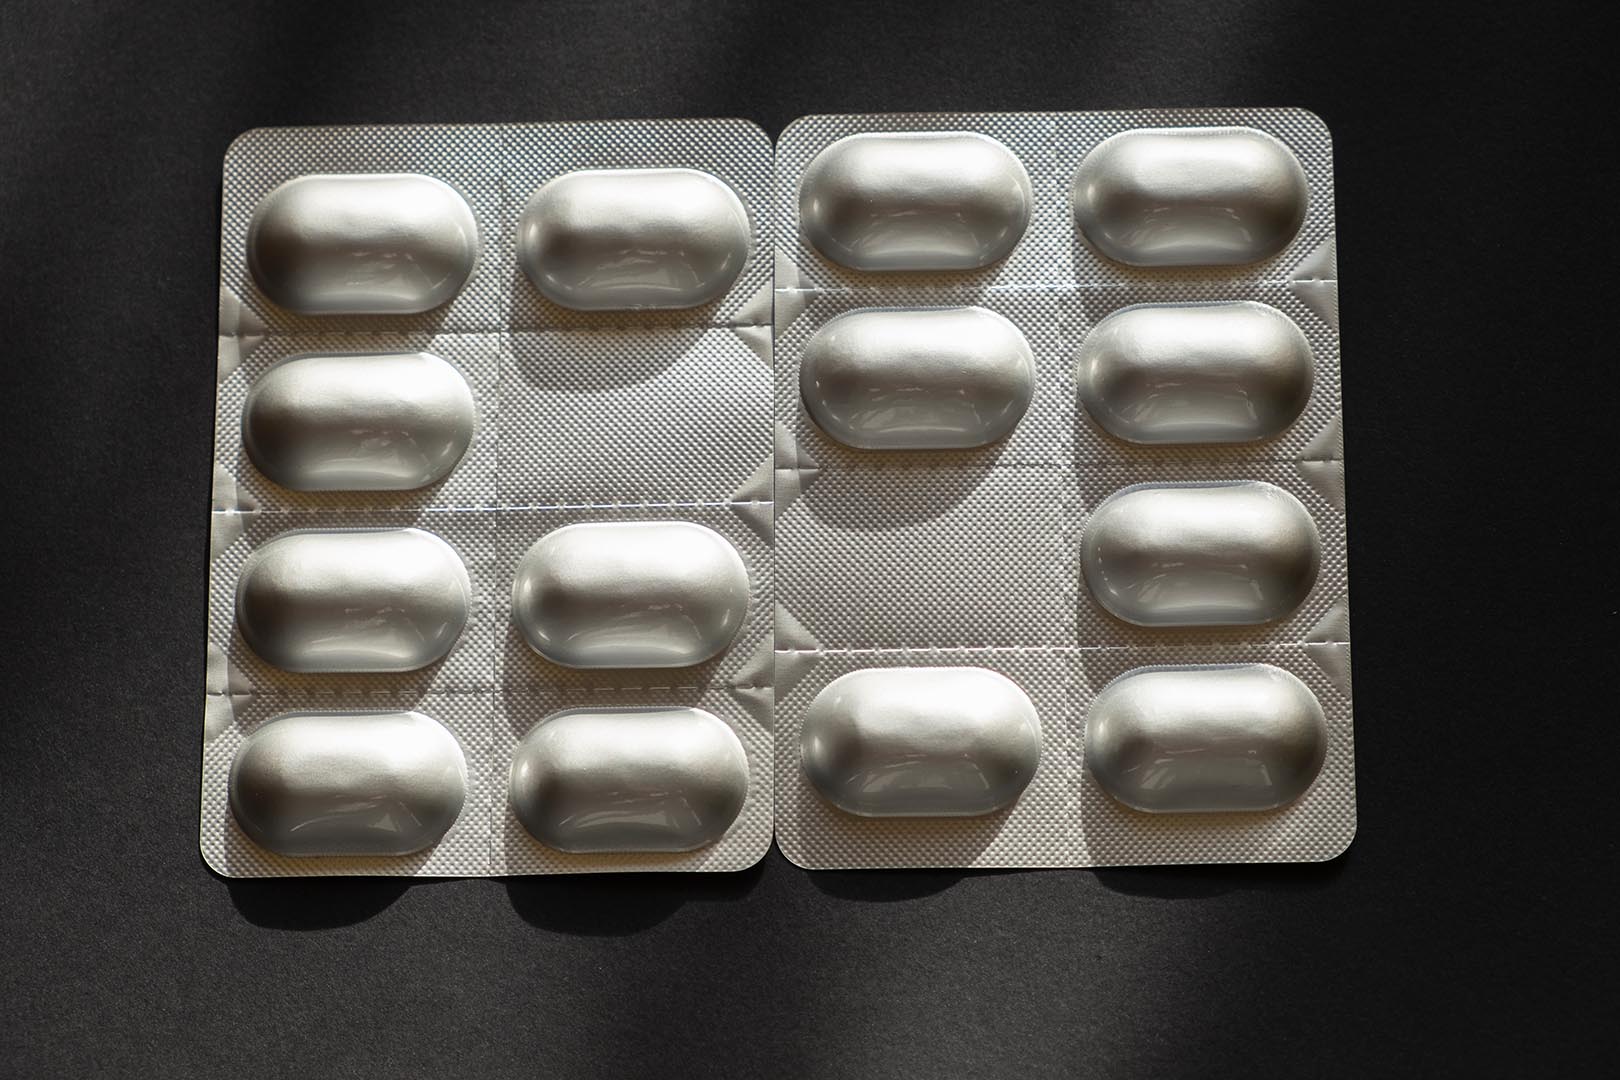 Obat Metronidazole, Salah Satu Antibiotik untuk Obati Infeksi